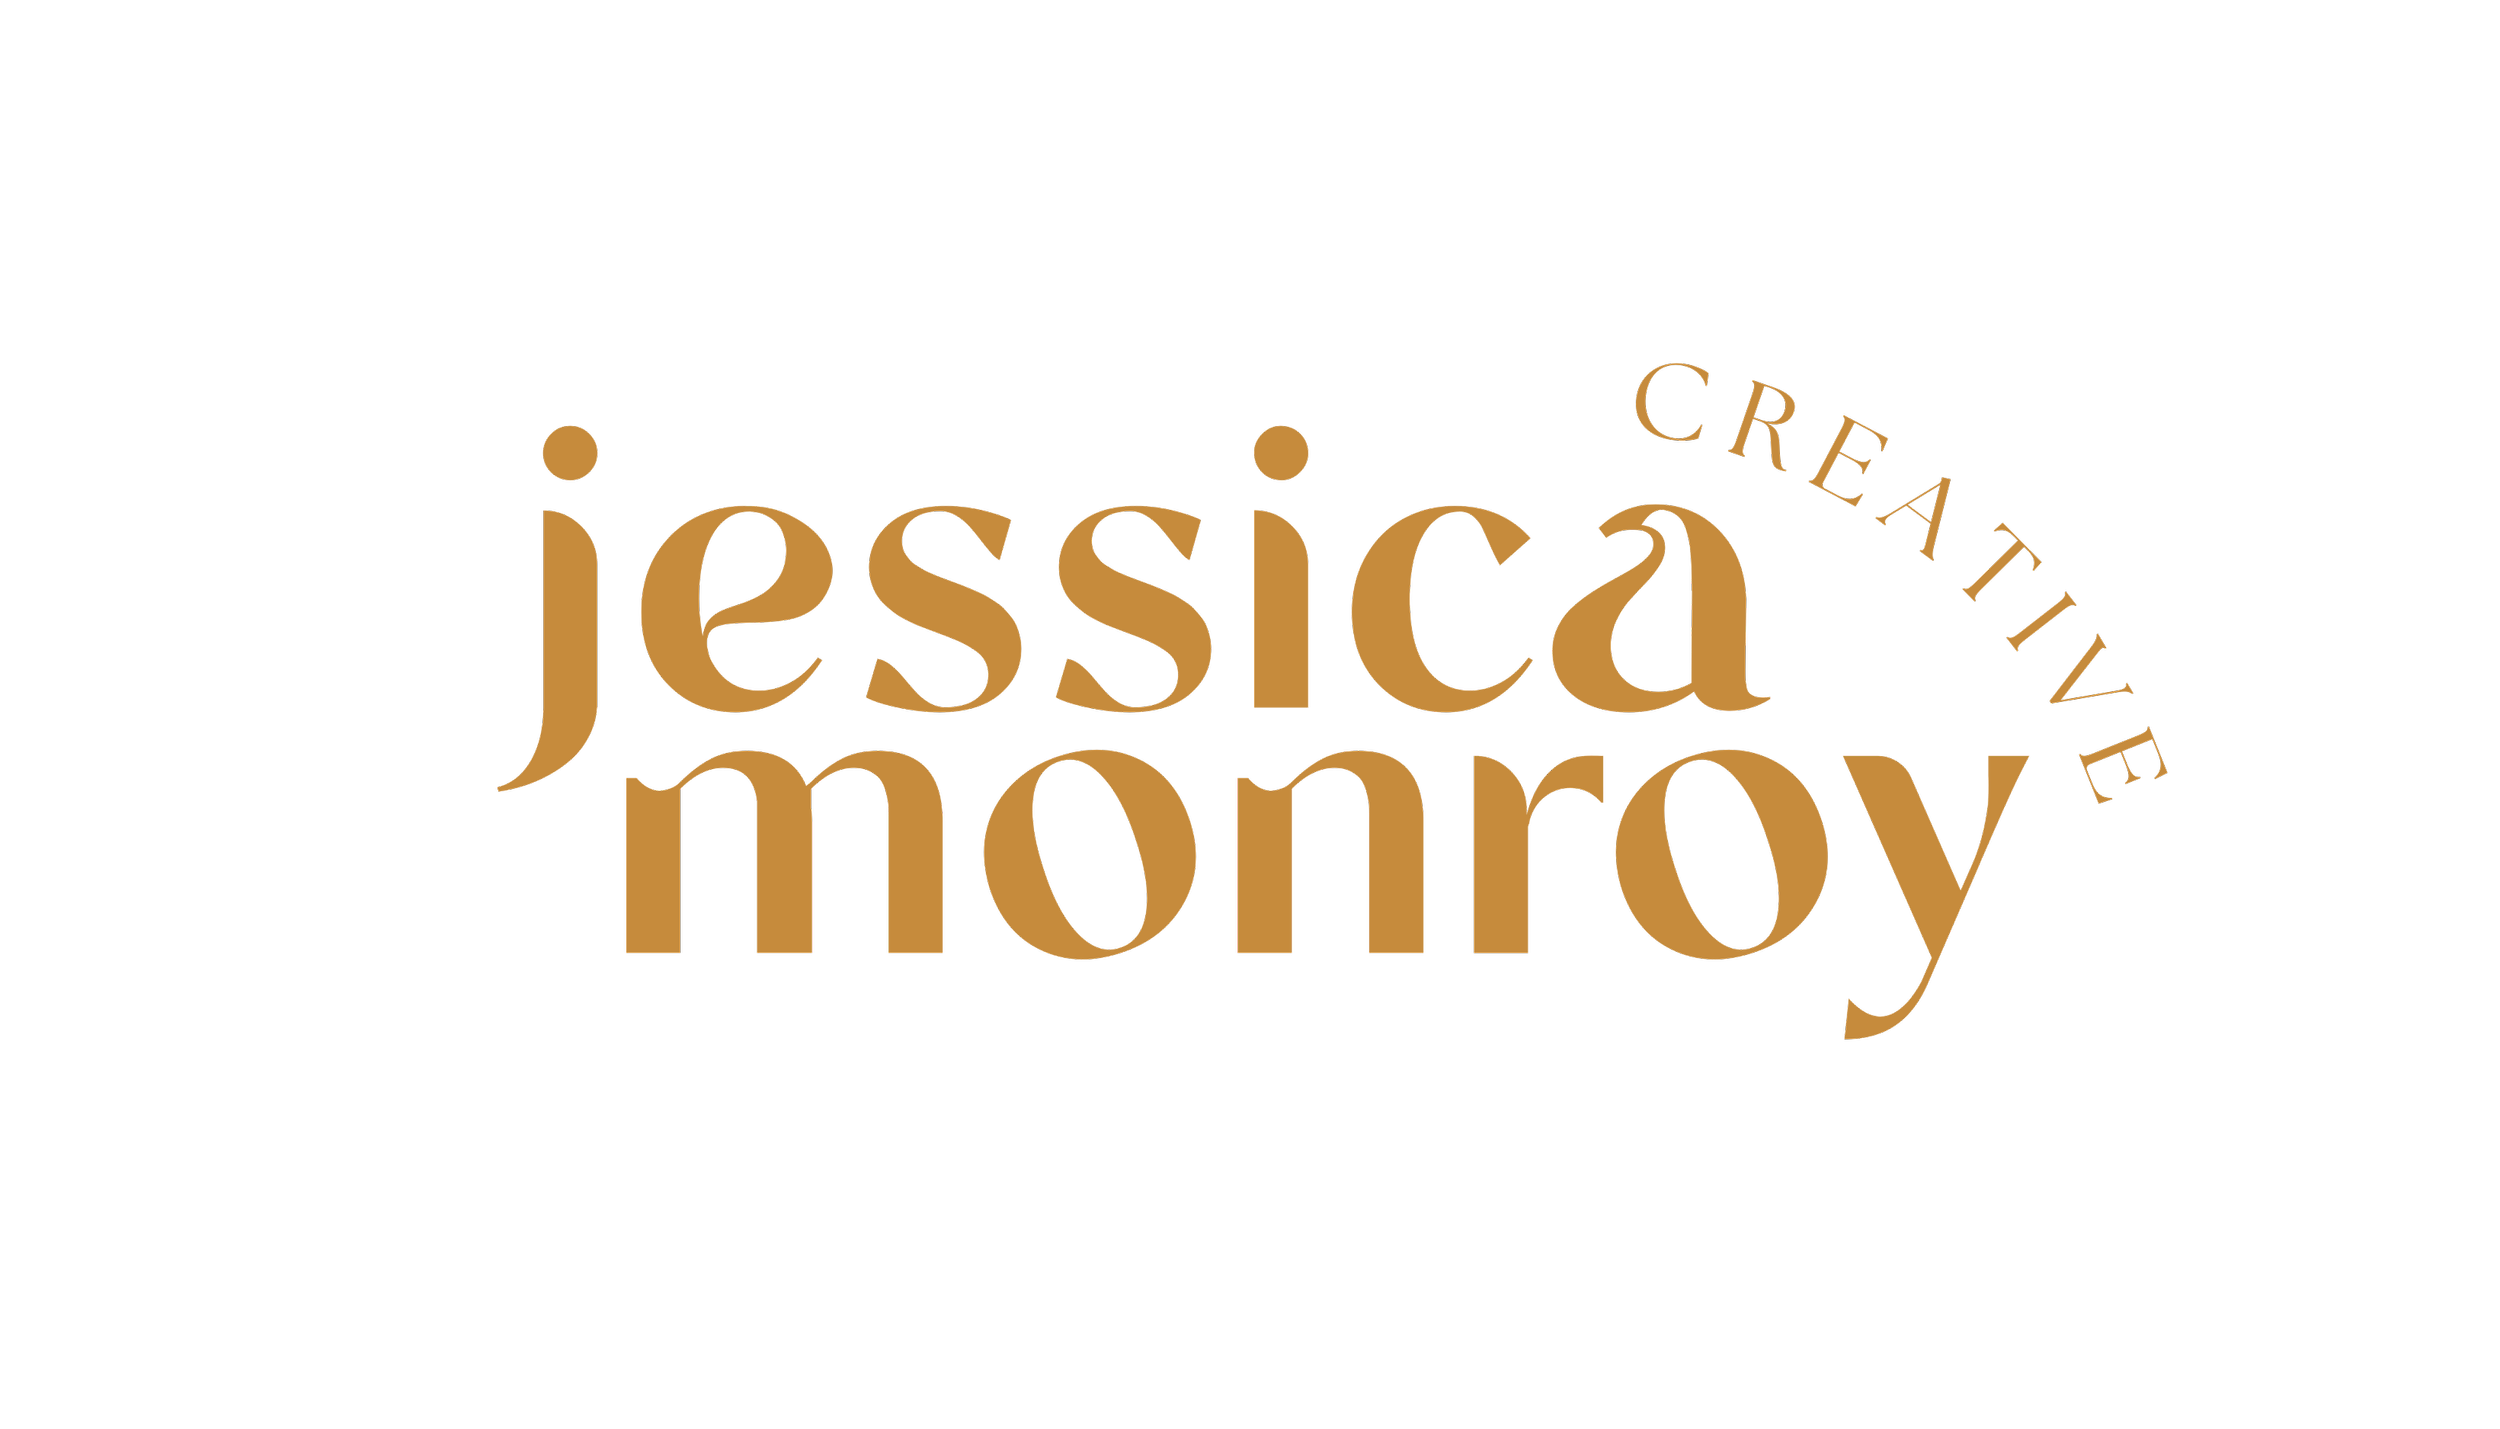 Jessica Monroy Creative